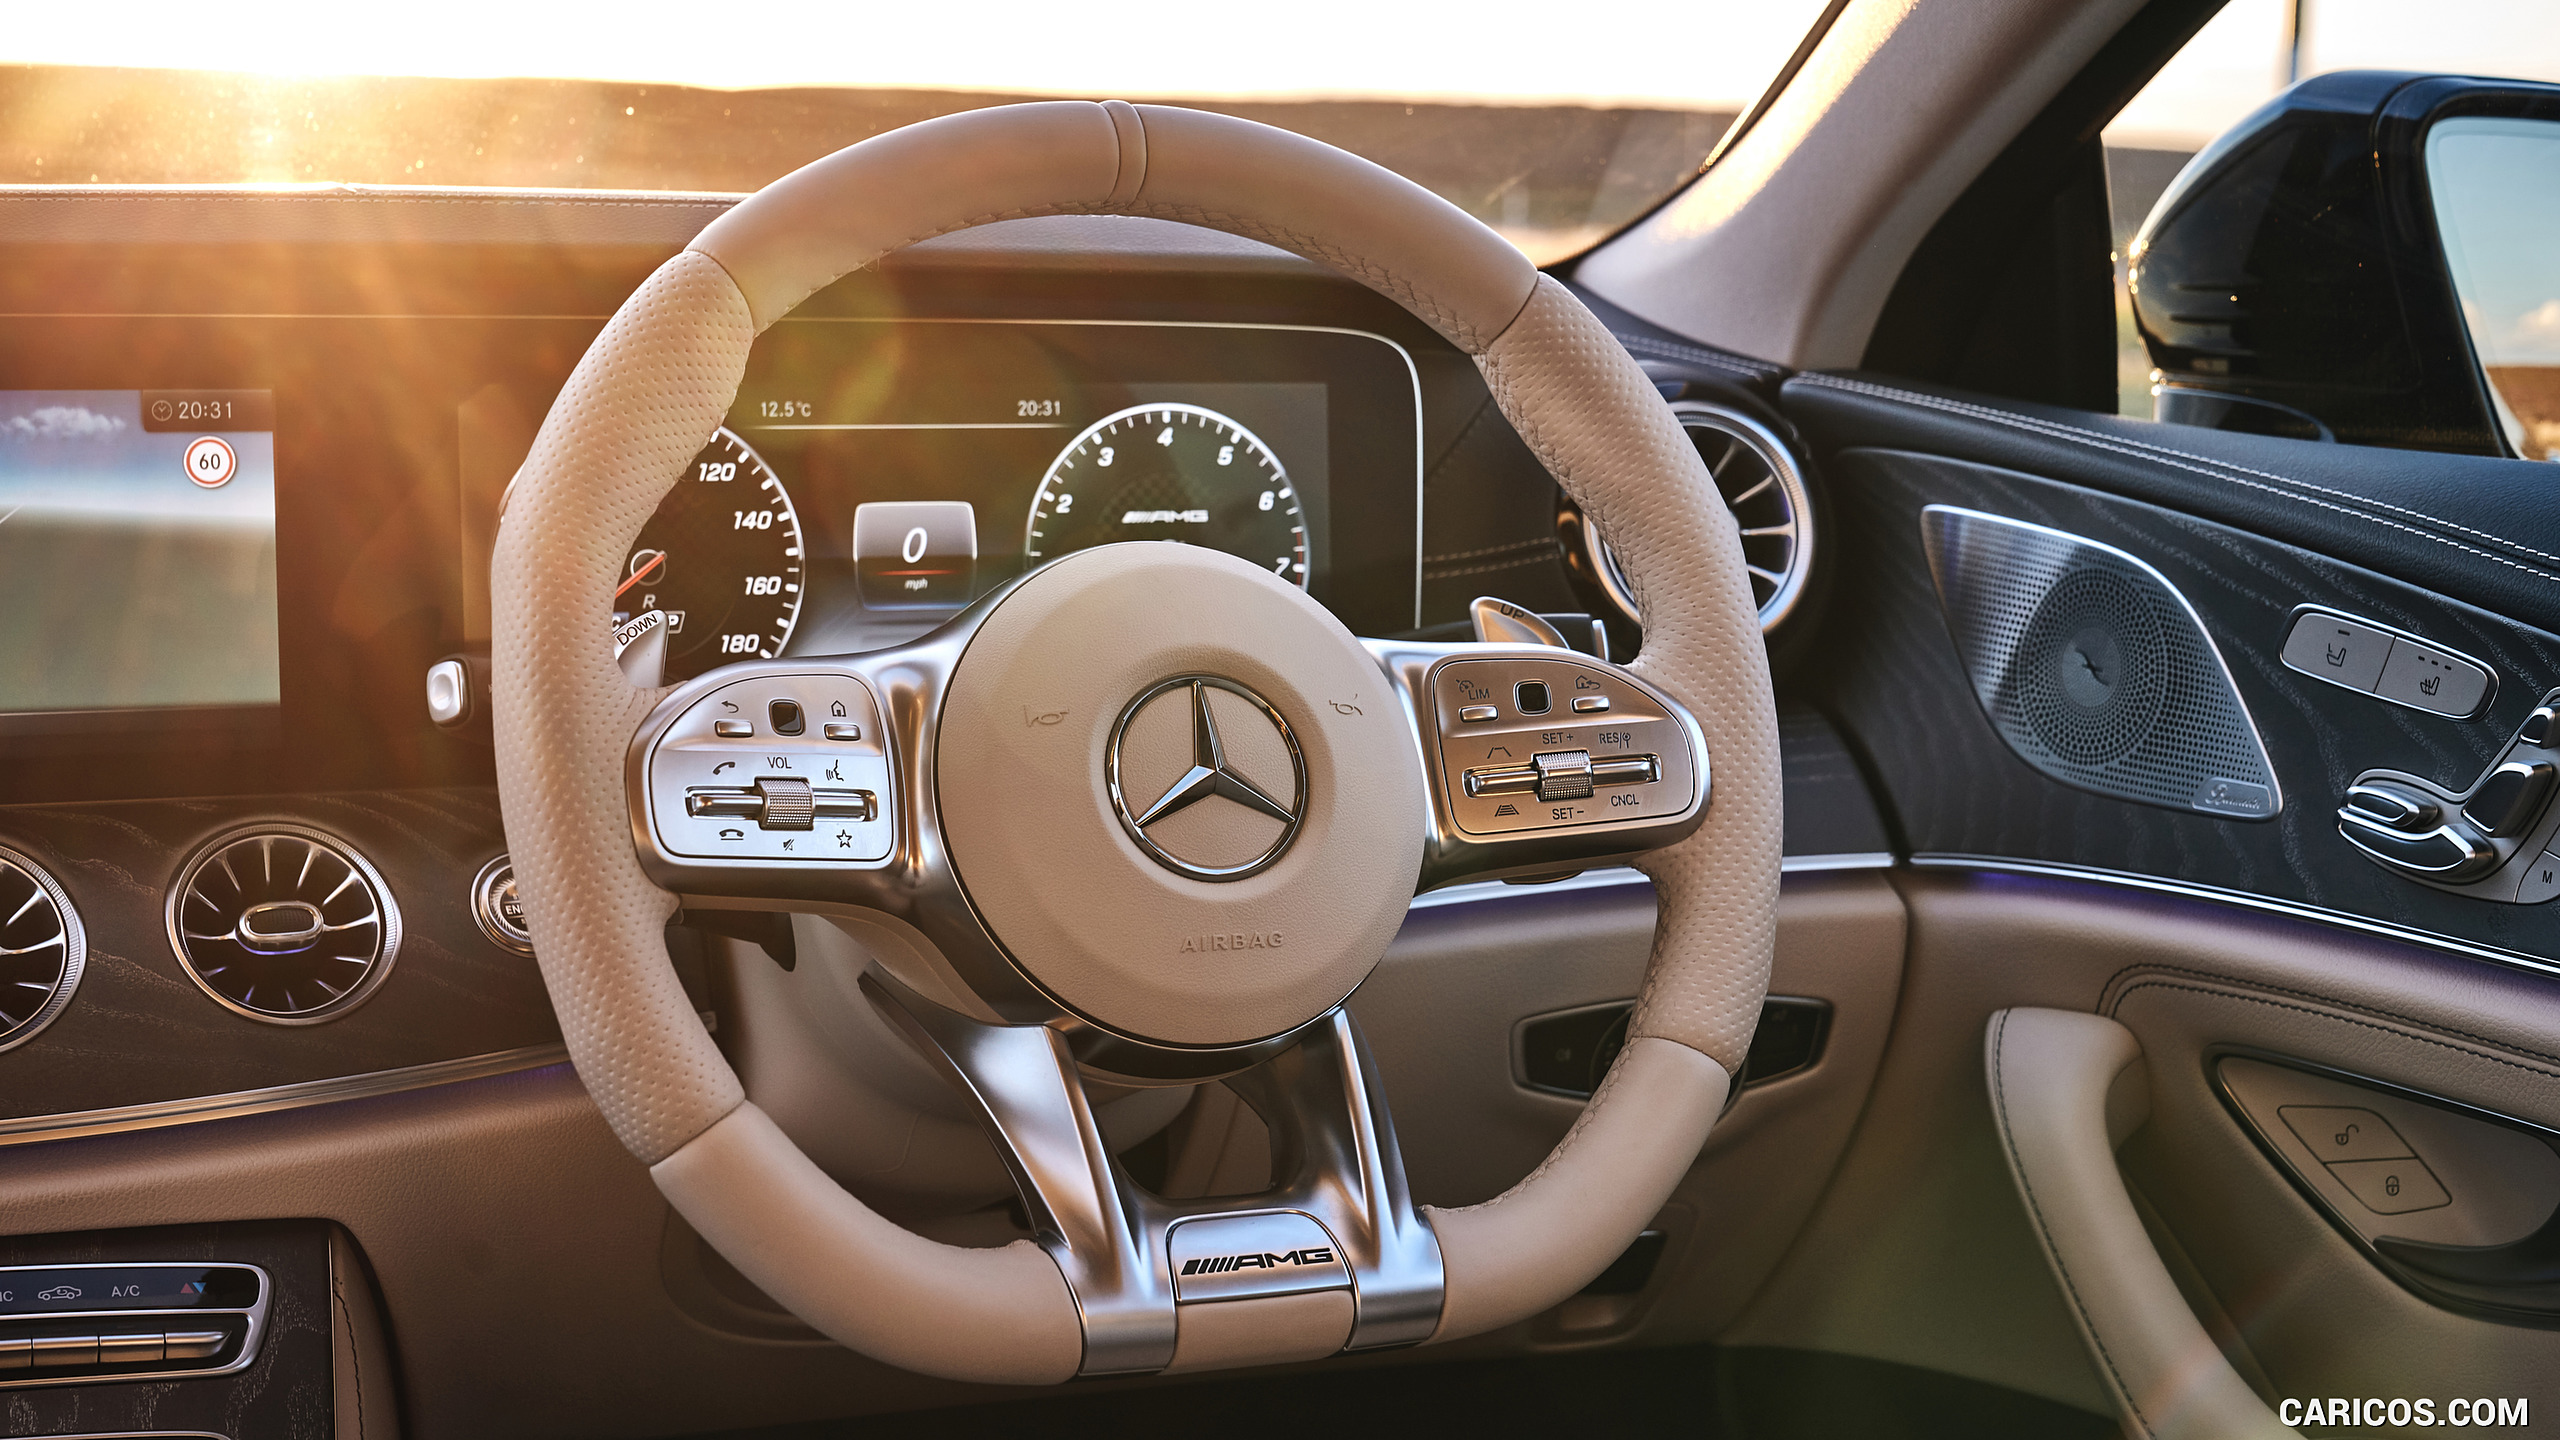 2019 Mercedes-AMG CLS 53 (UK-Spec) - Interior, Steering Wheel, #83 of 98